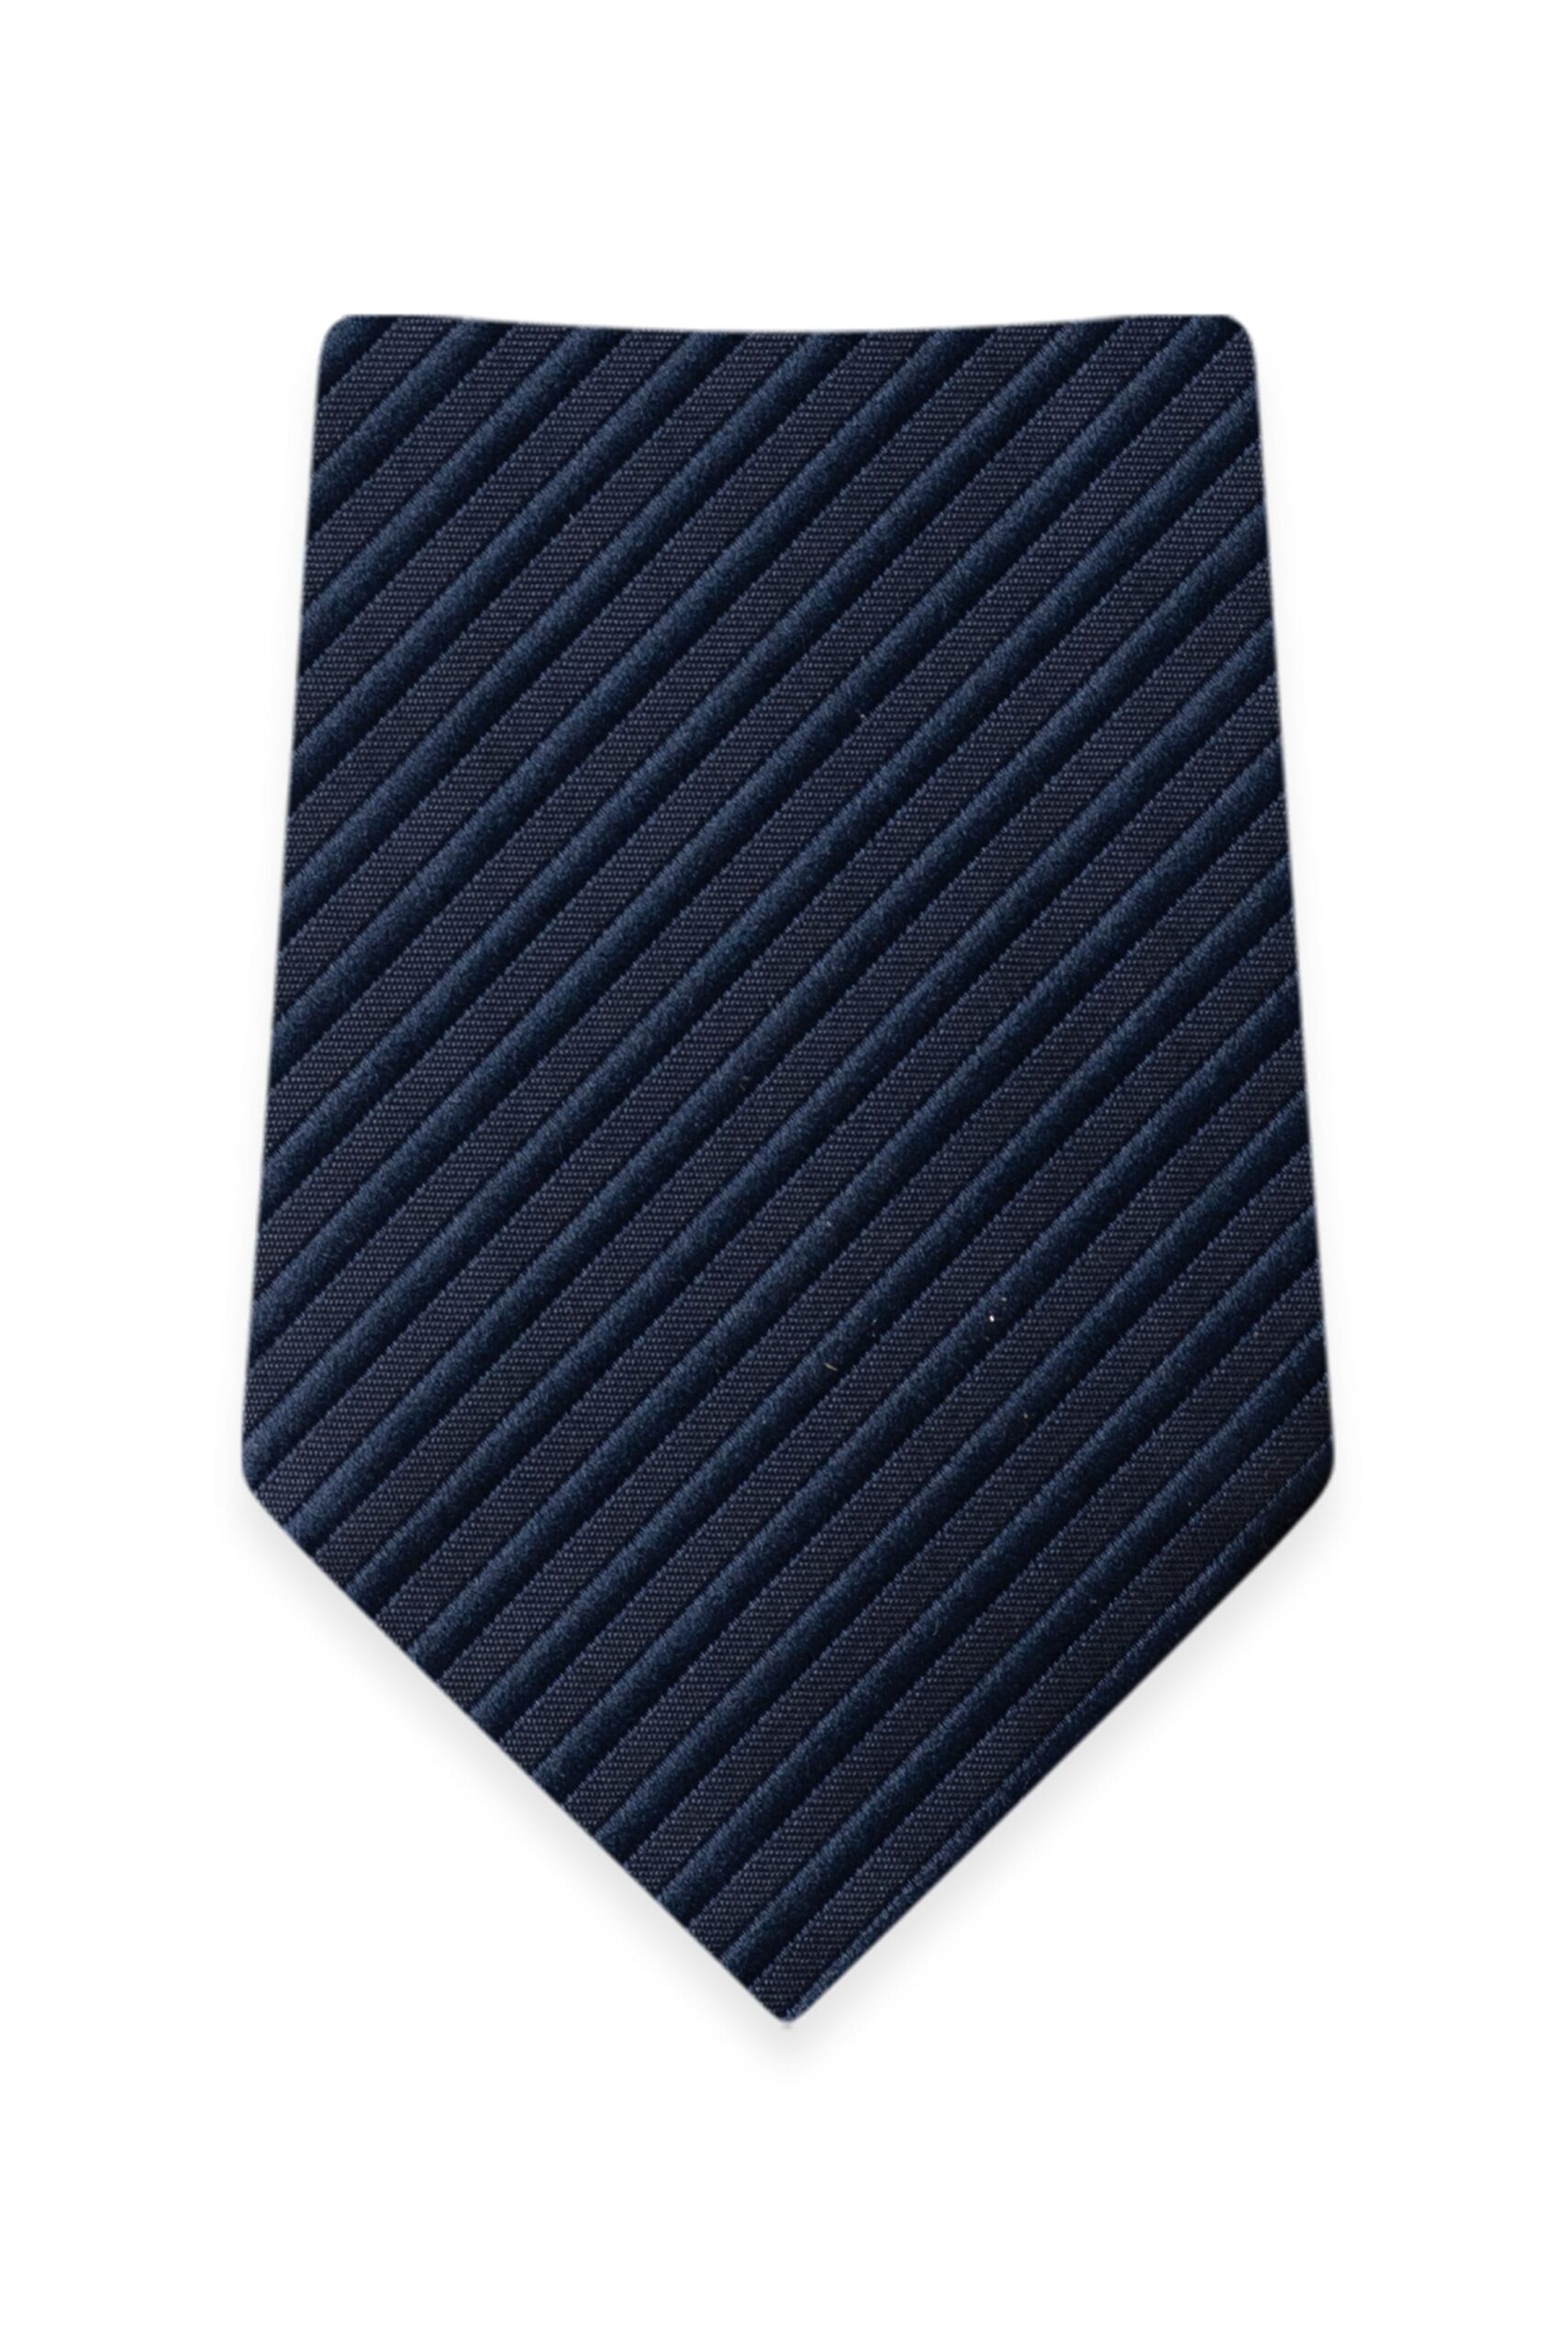 Striped Navy Self-Tie Windsor Tie 1